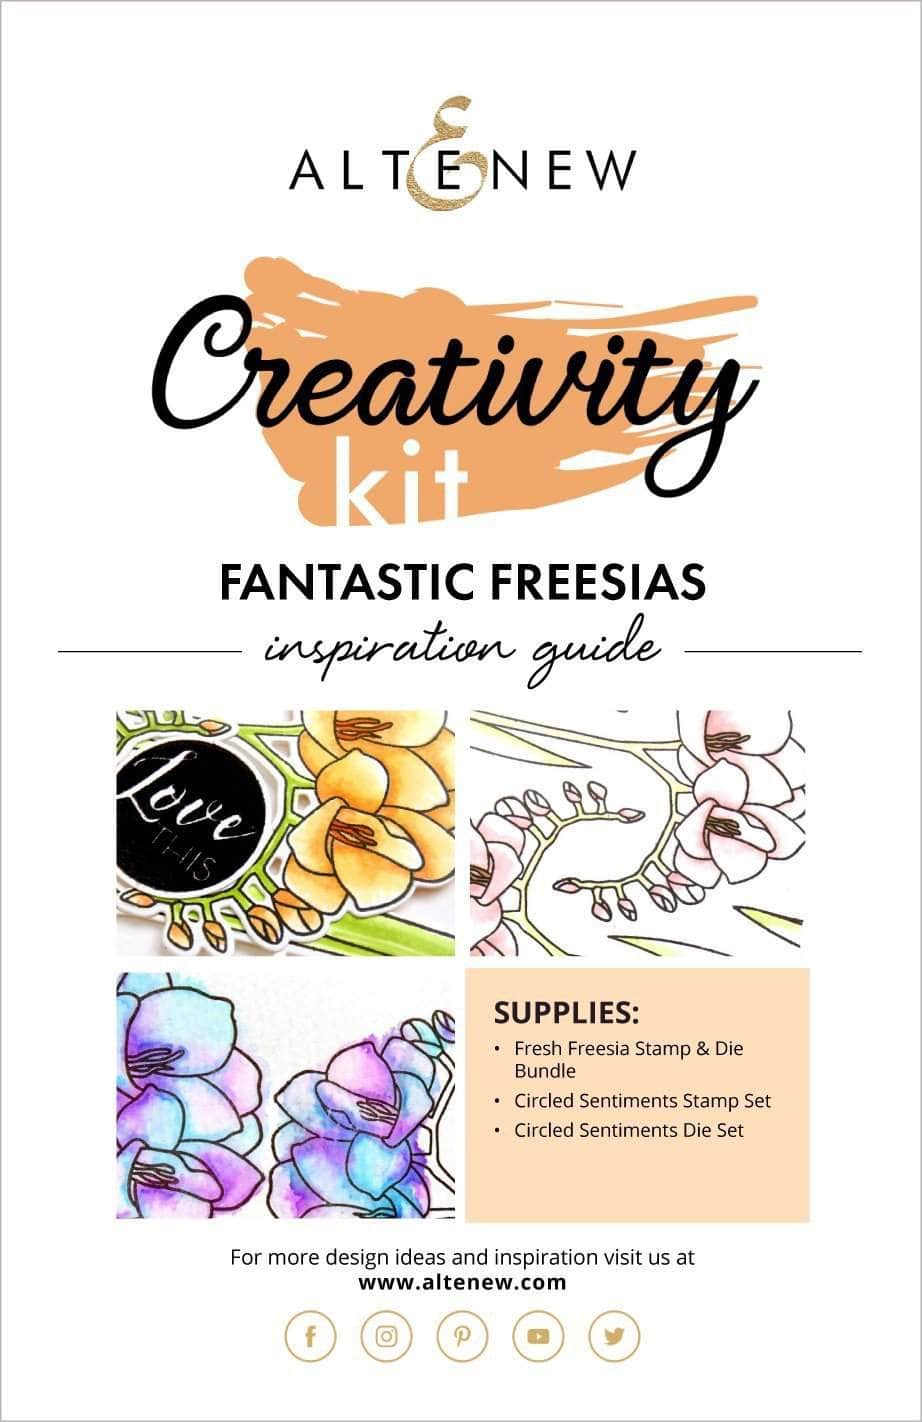 Printed Media Fantastic Freesias Creativity Kit Inspiration Guide